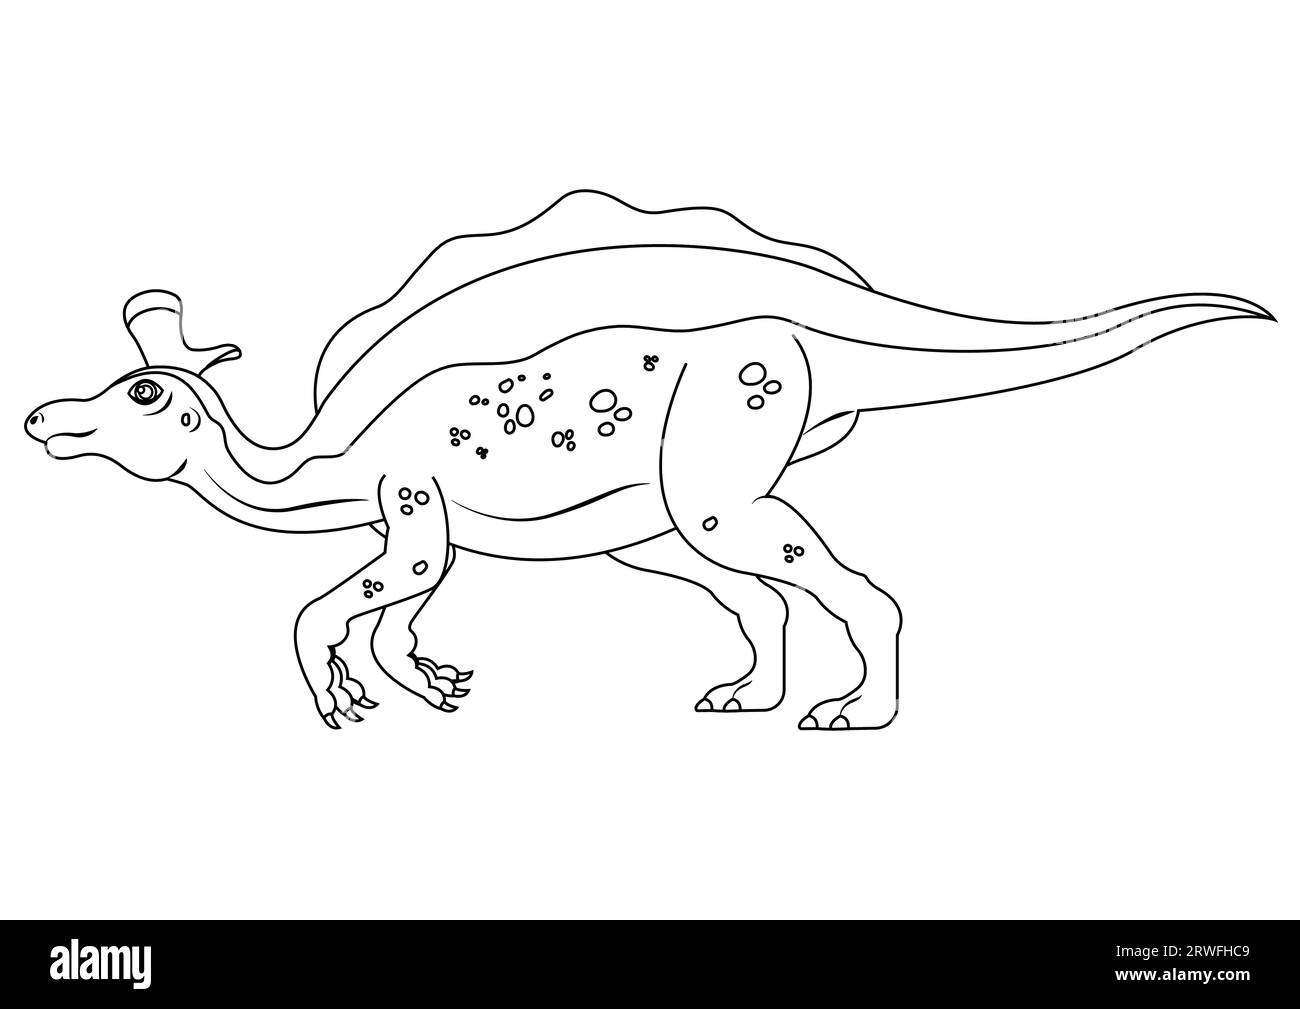 Black and White Lambeosaurus Dinosaur Cartoon Character Vector. Coloring Page of a Lambeosaurus Dinosaur Stock Vector